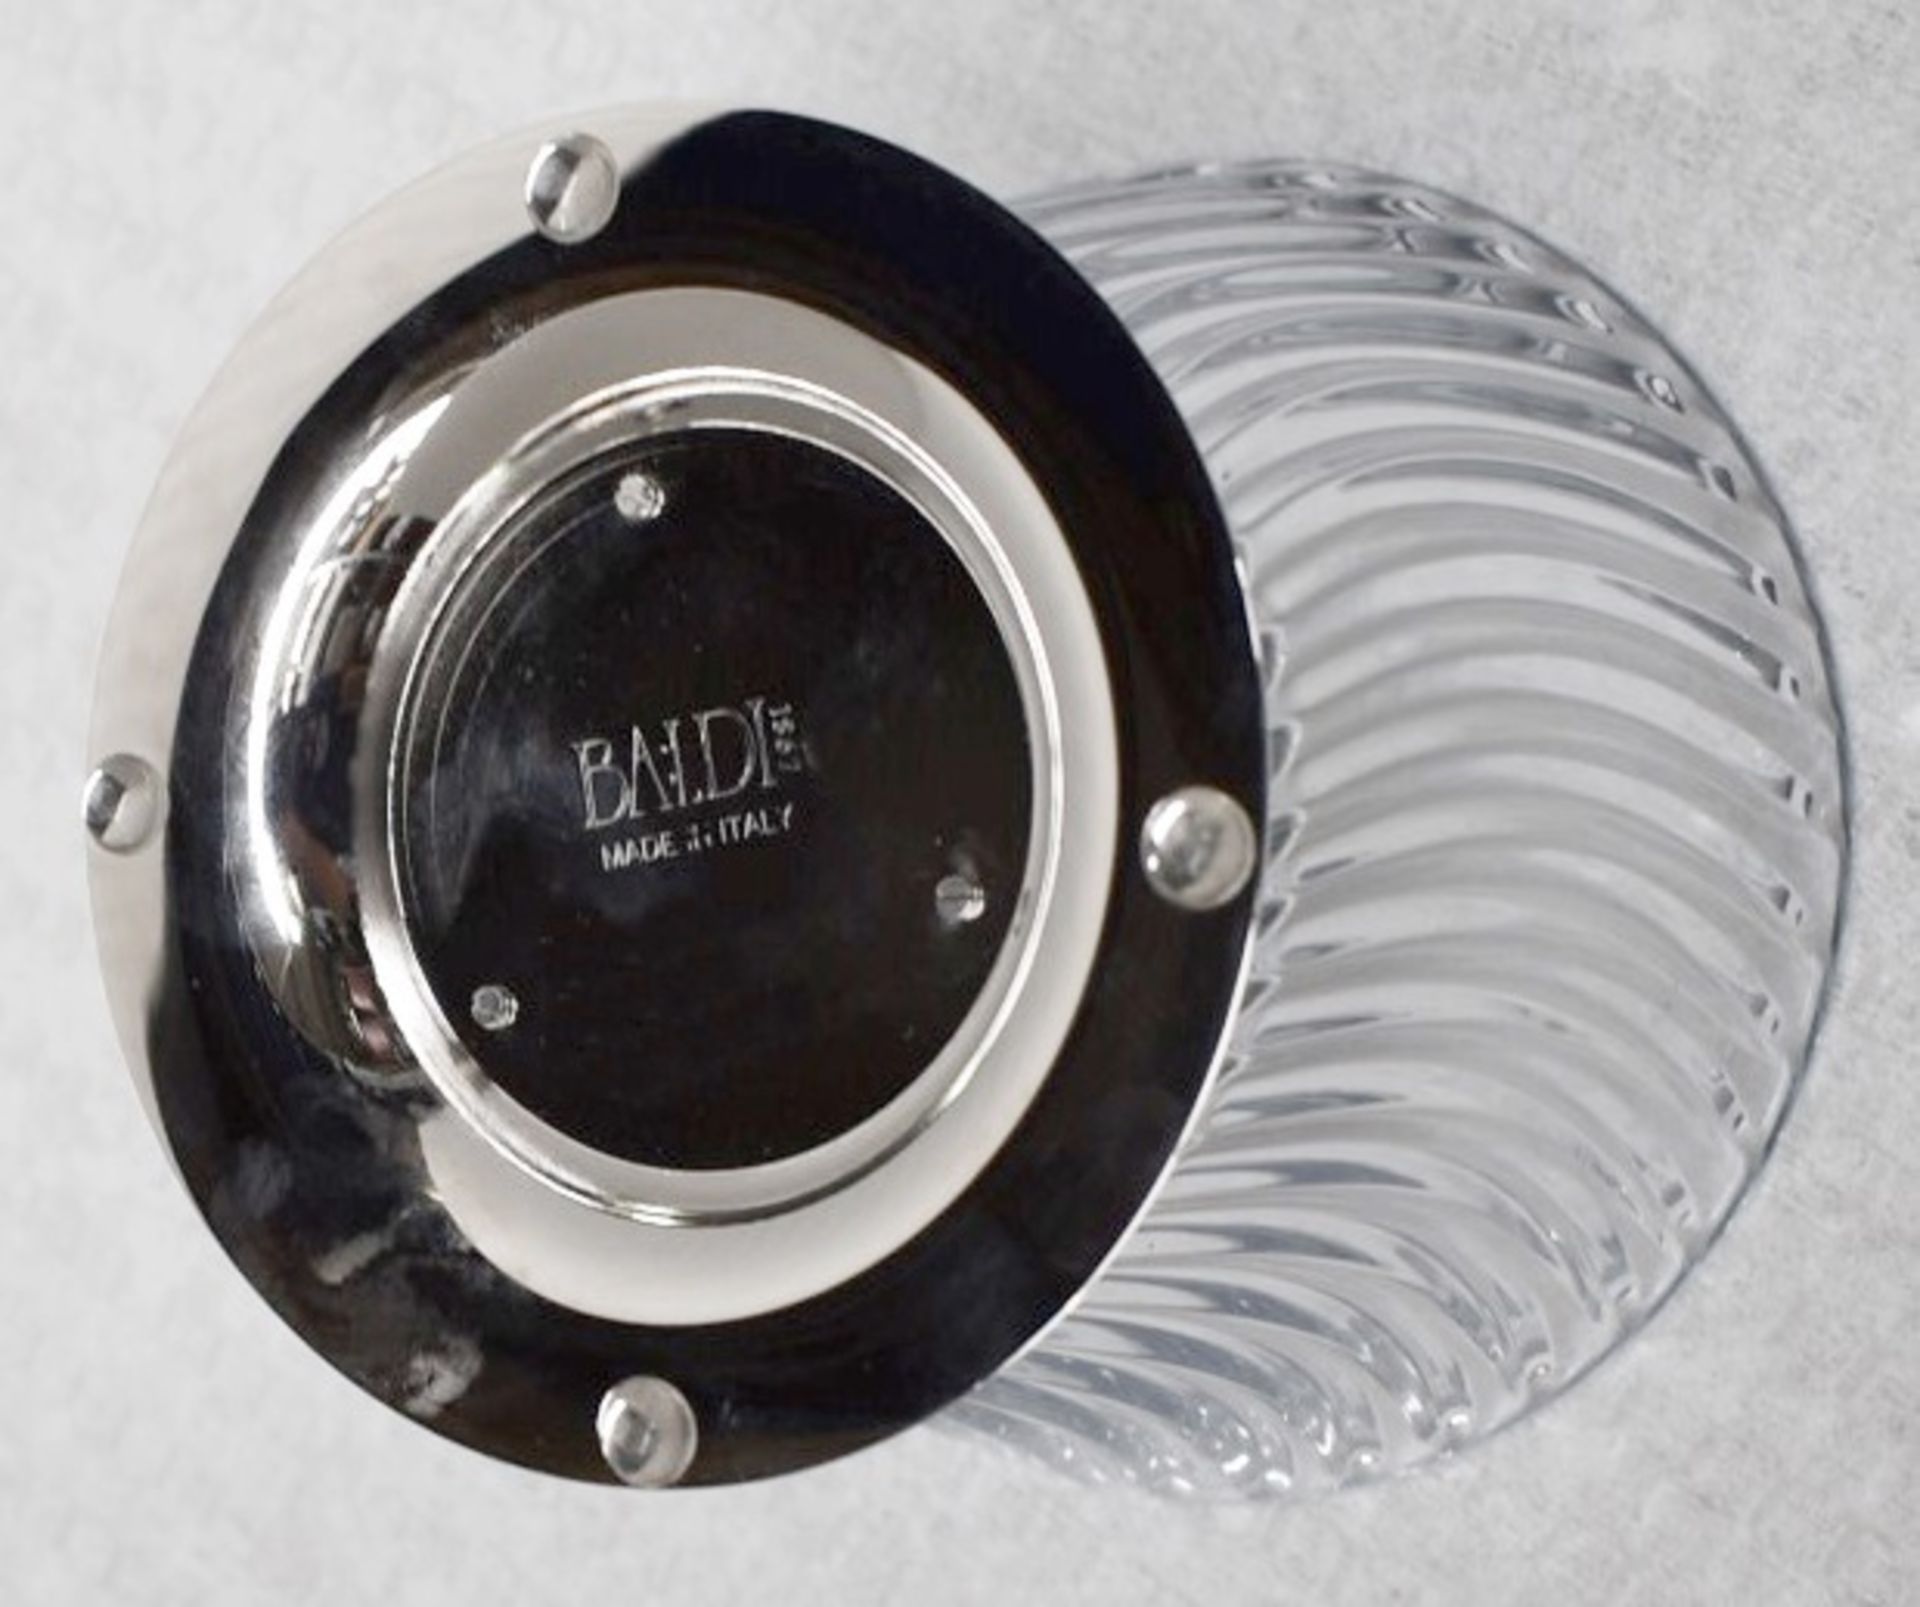 1 x BALDI 'Home Jewels' Italian Hand-crafted Artisan Crystal Marika Cup - Original RRP £1,090 - Image 3 of 5